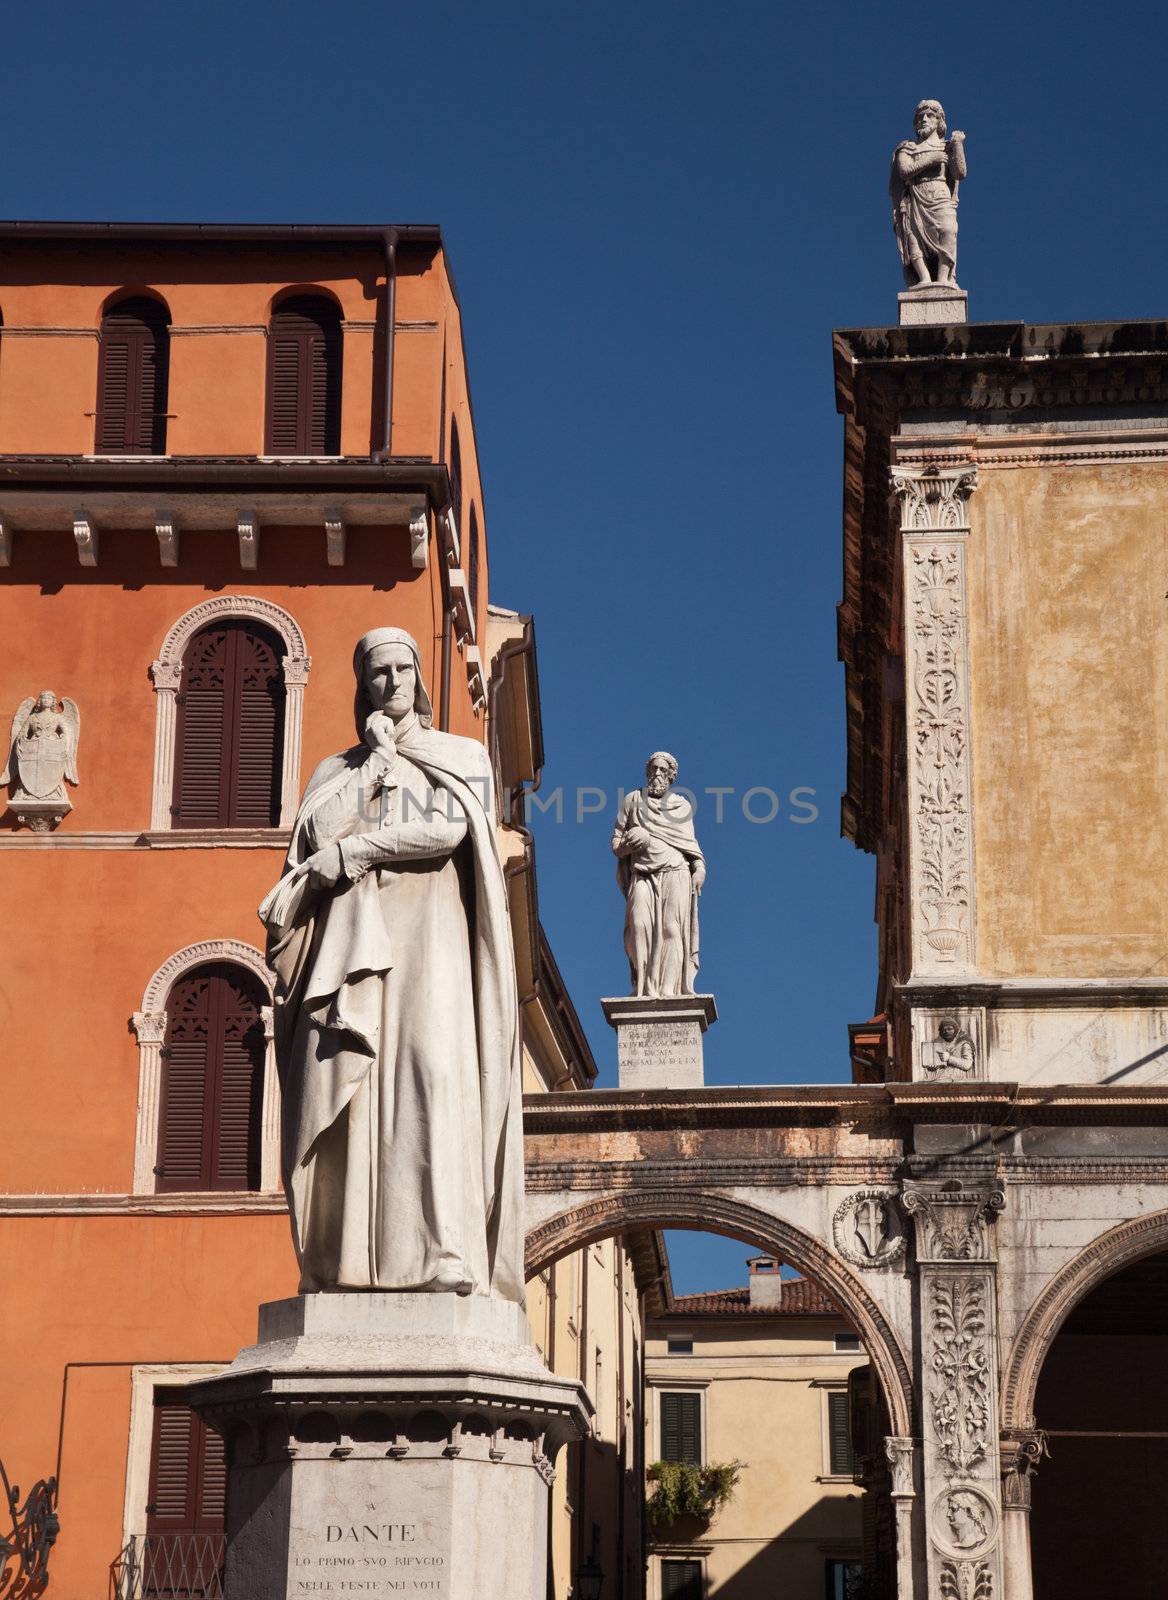 Statue of Dante in Verona by steheap